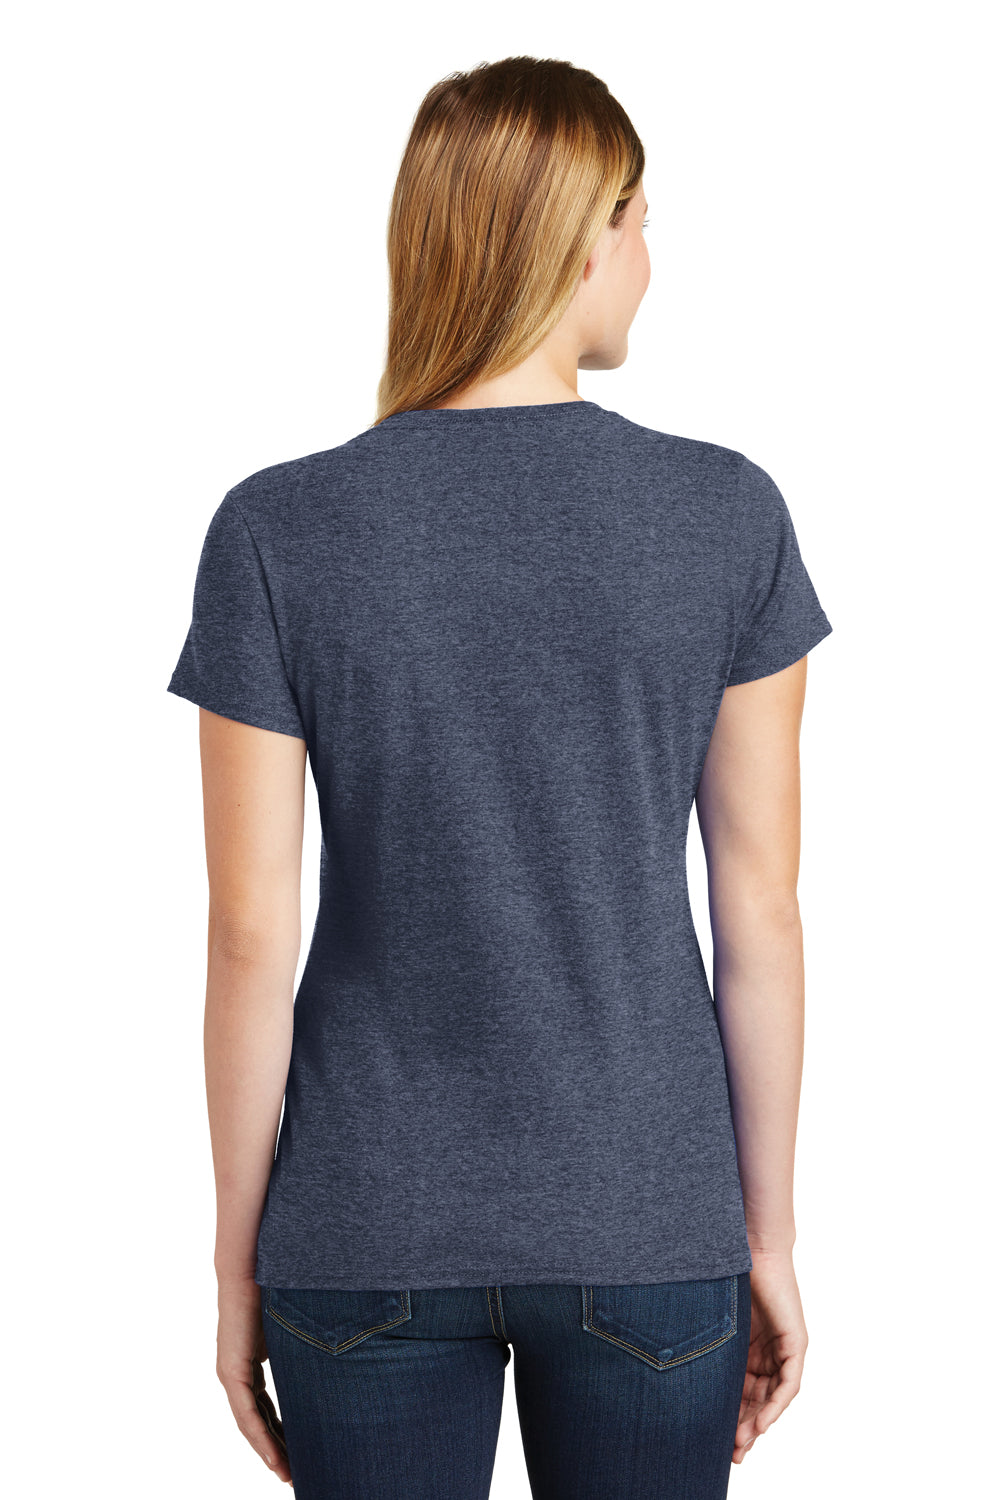 Port & Company LPC450 Womens Fan Favorite Short Sleeve Crewneck T-Shirt Heather Navy Blue Back